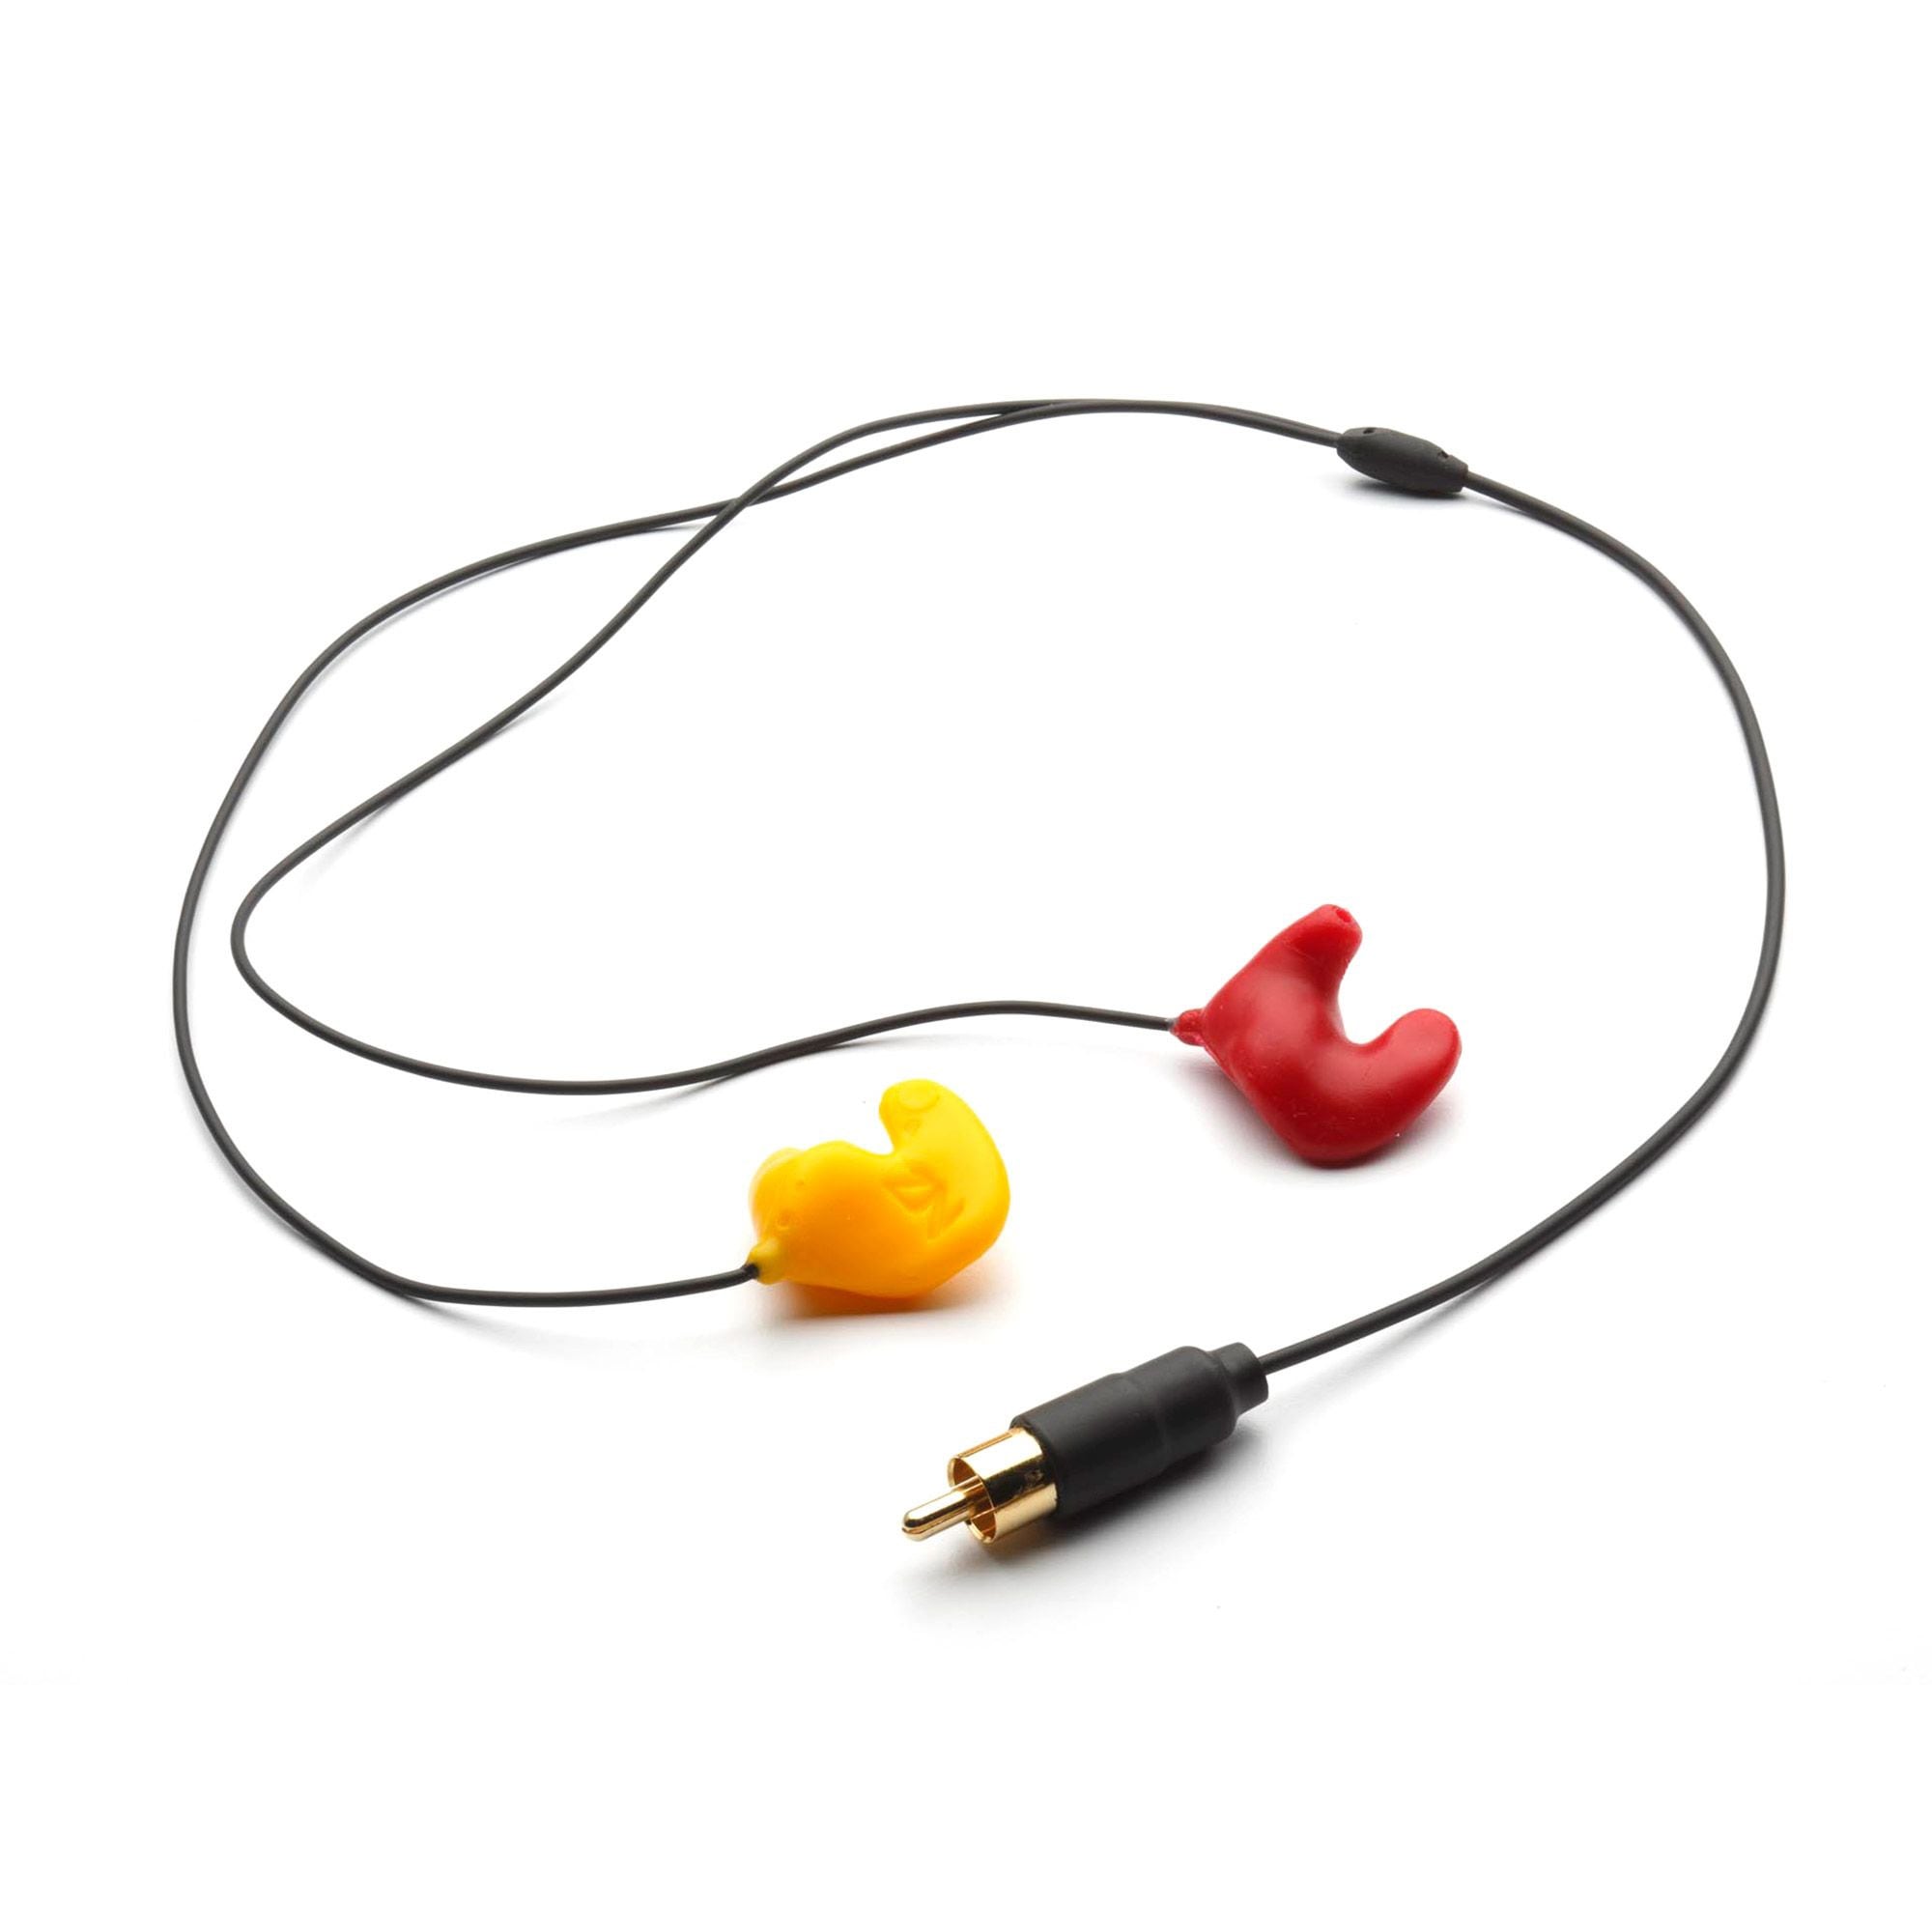 In-ear lurar ZeroNoise RCA (CINCH) Standard